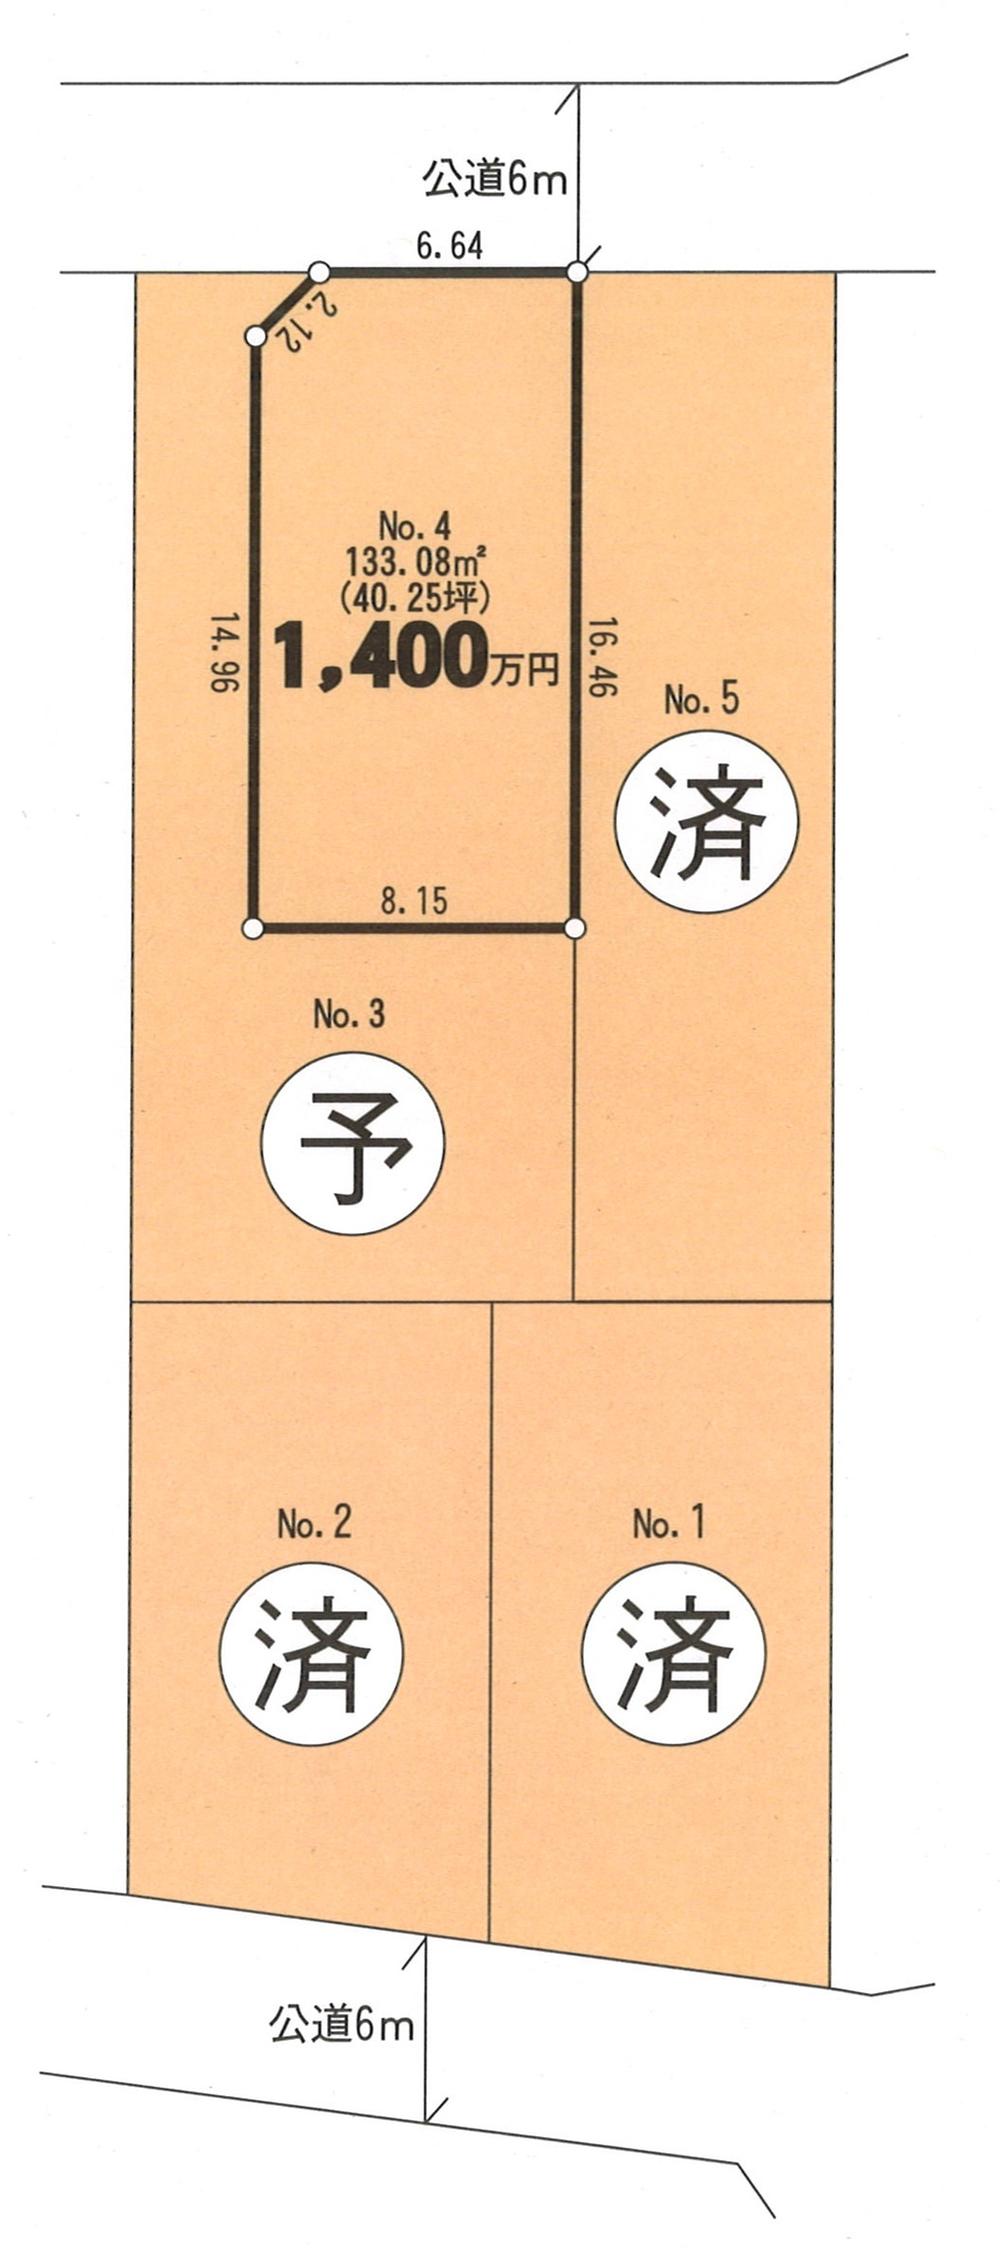 Compartment figure. Land price 14 million yen, Land area 133.08 sq m